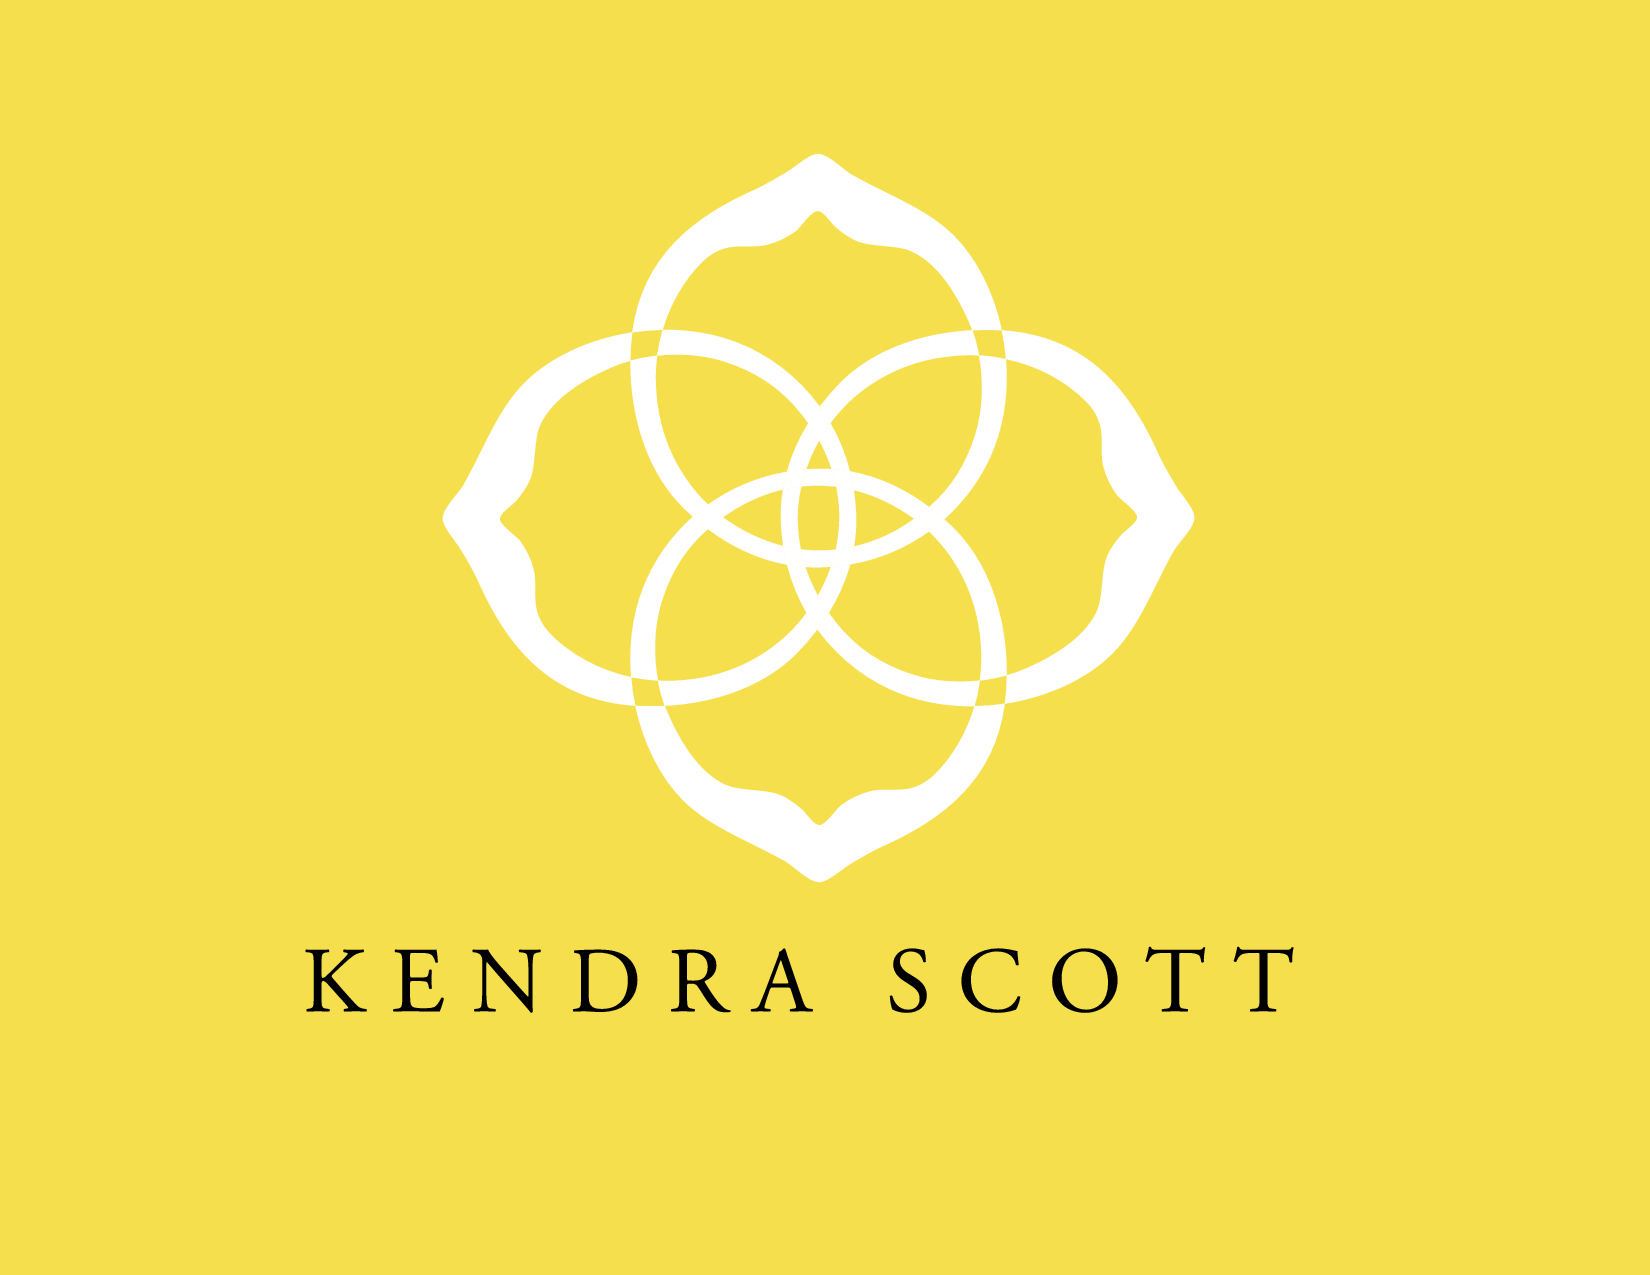 Scott Name Logo - kendra-scott-logo - Smart Start of Mecklenburg